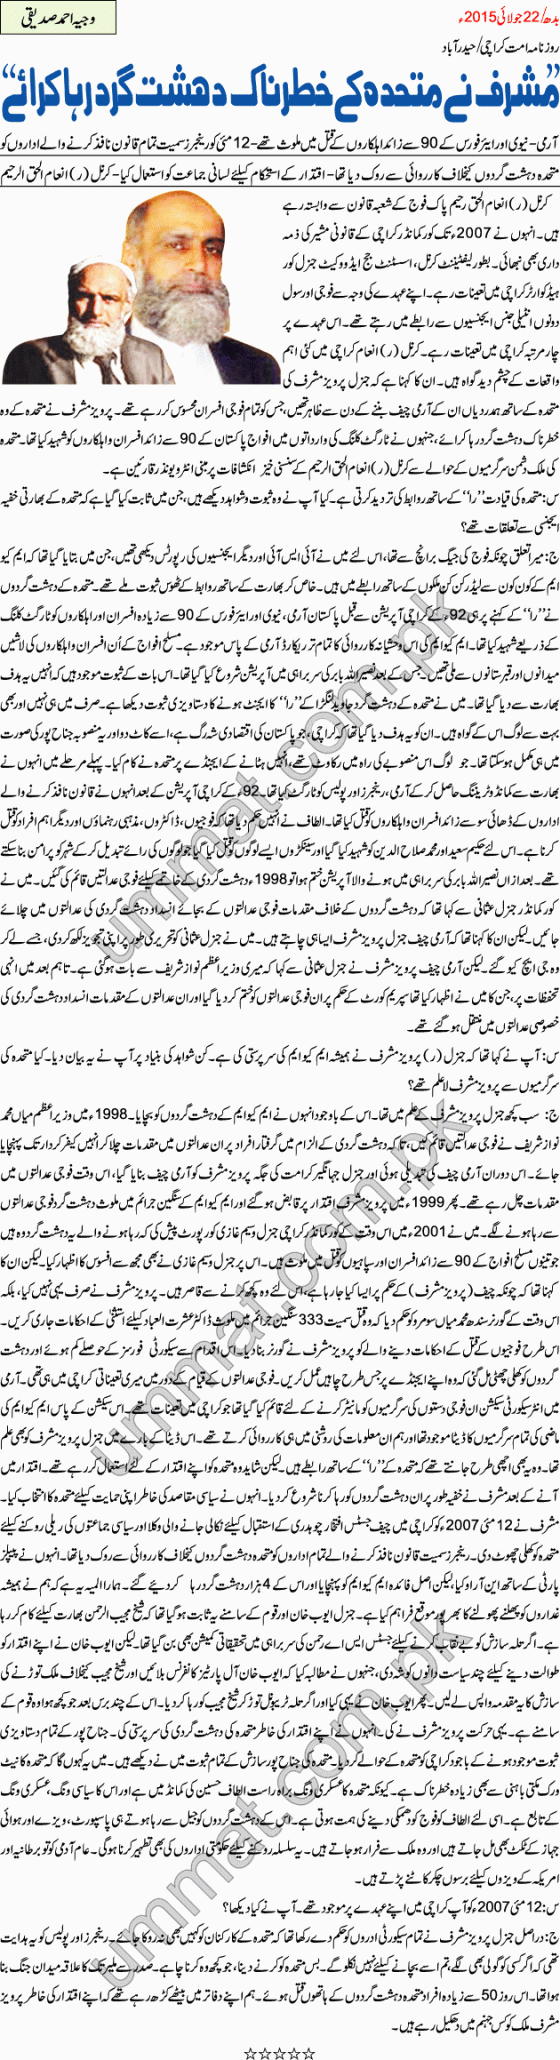 Yazeedi Kutta Musharraf released Many MQM Terrorists_Umt_22-07-15